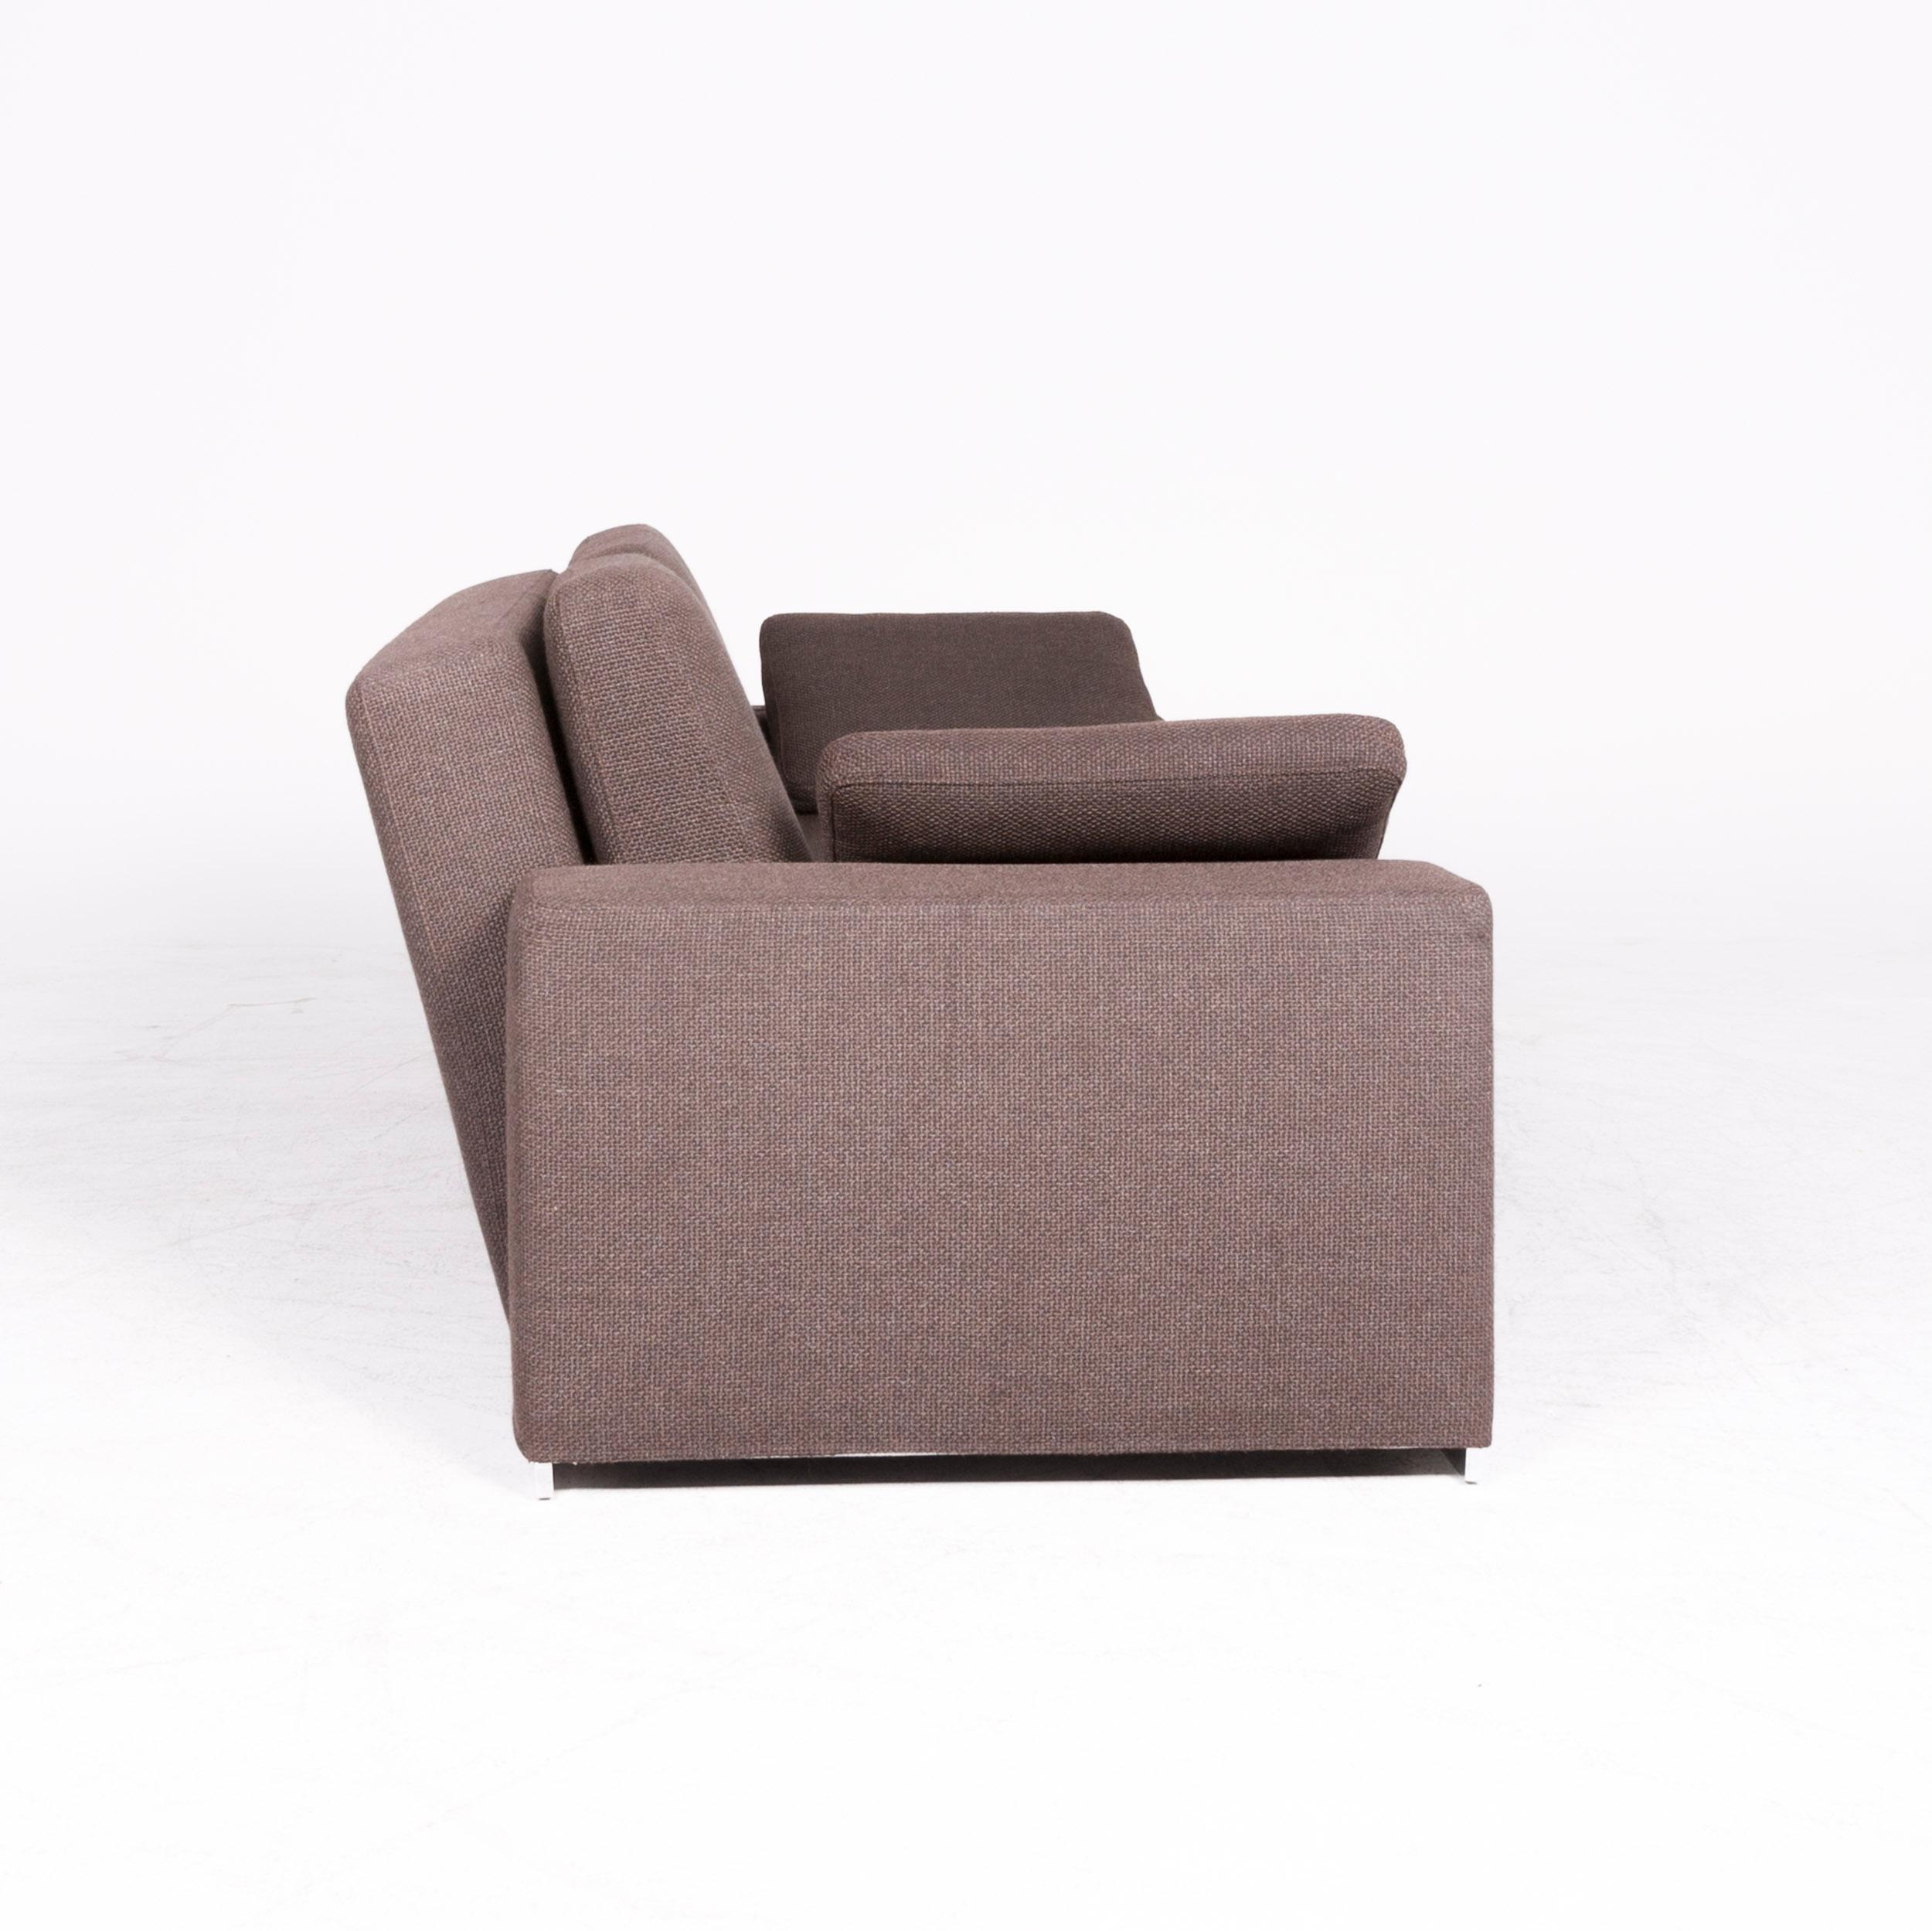 Brühl & Sippold Designer Fabric Sofa Brown Two-Seat Sofa Function Sofa Bed 4